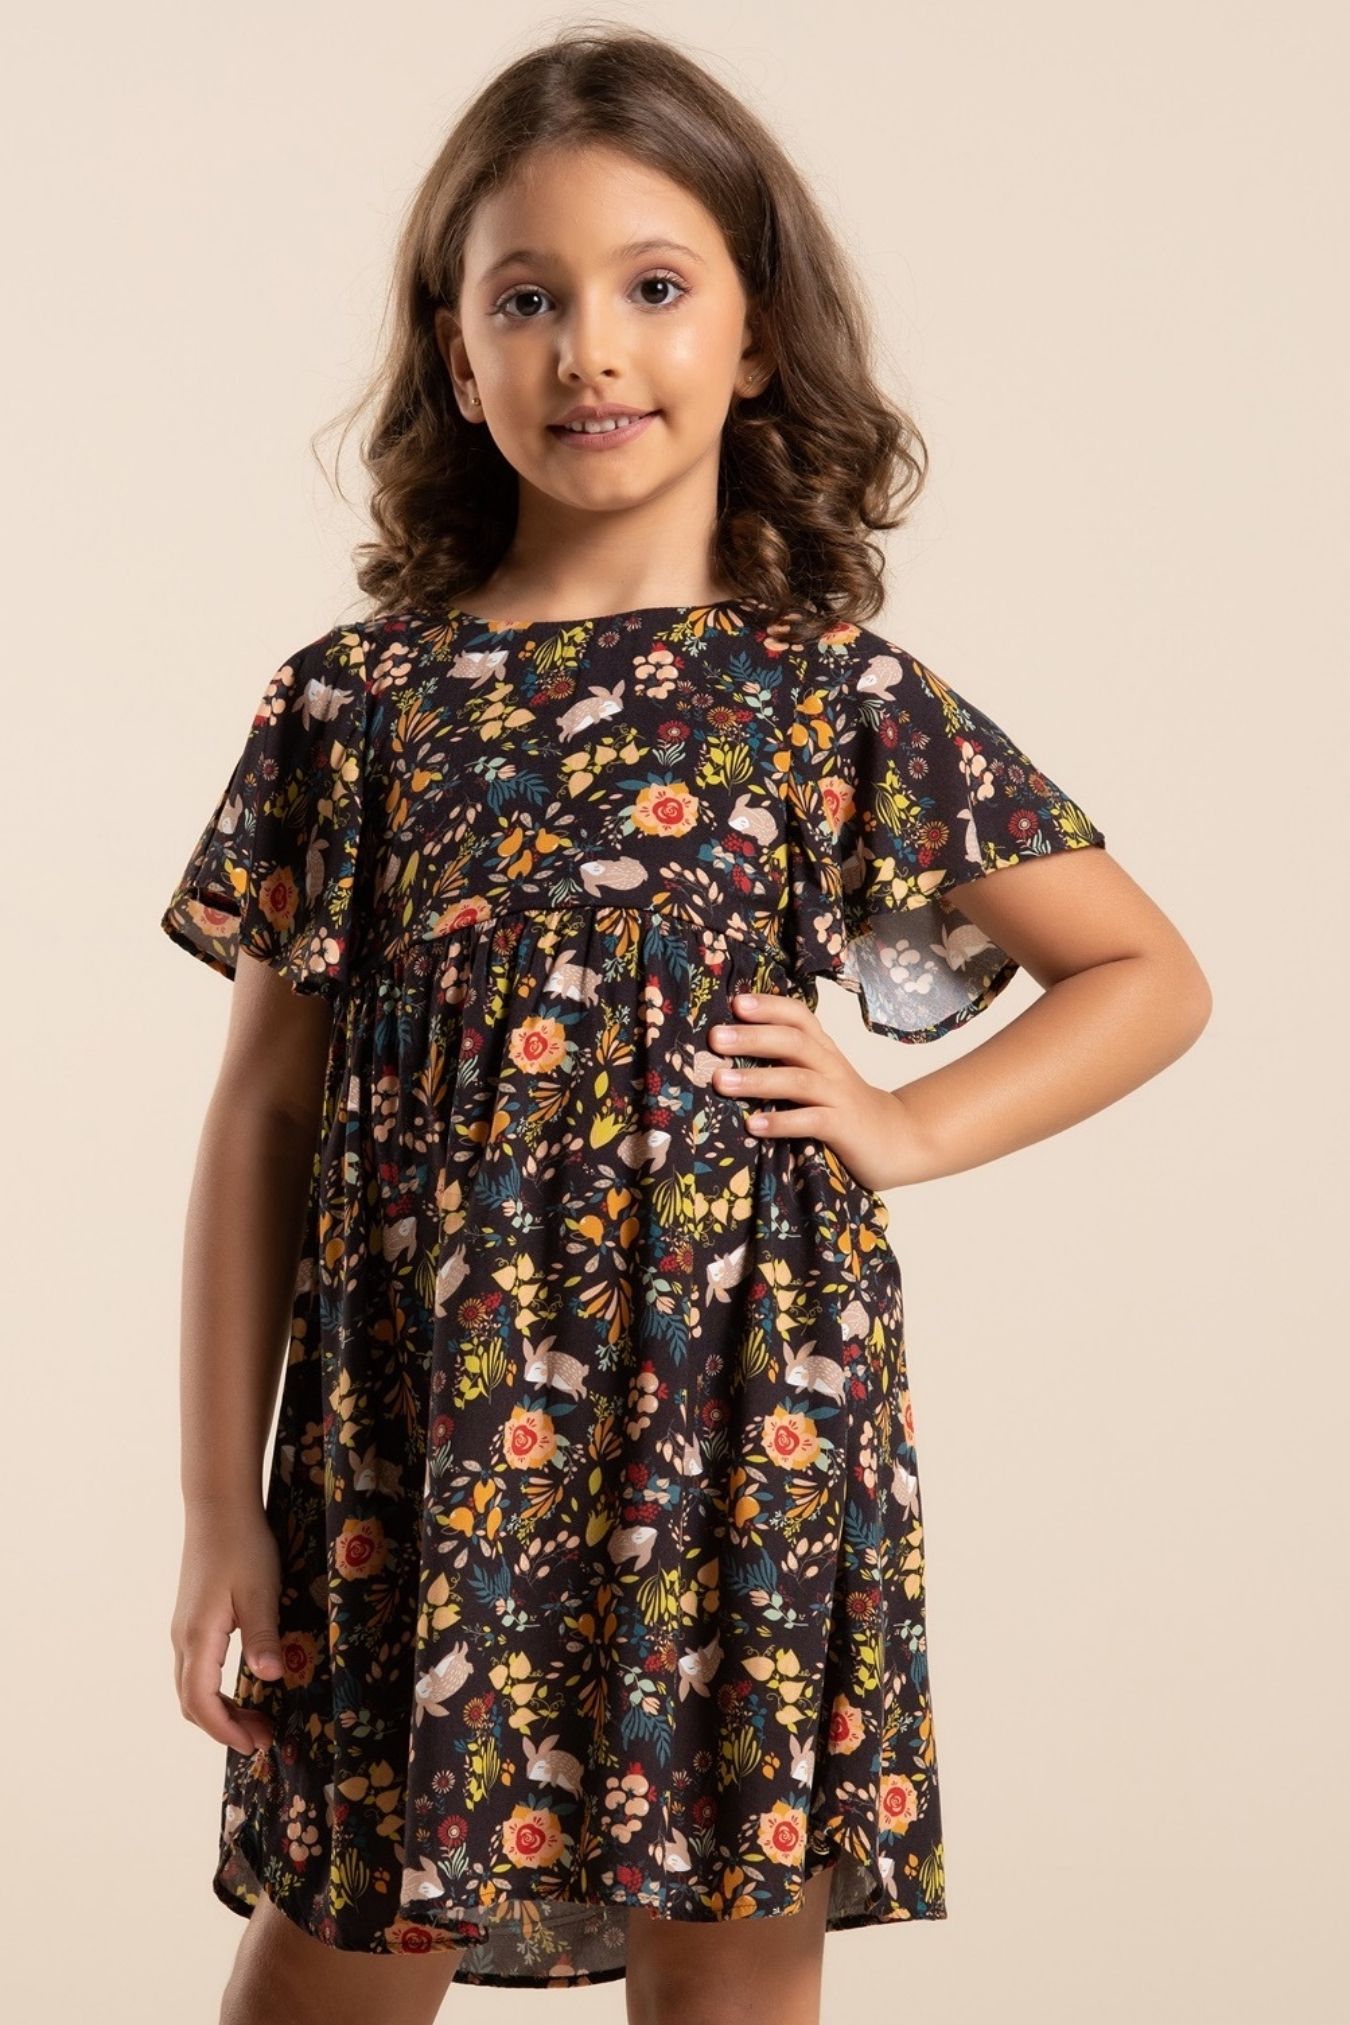 Vestido infantil com estampa digital exclusiva